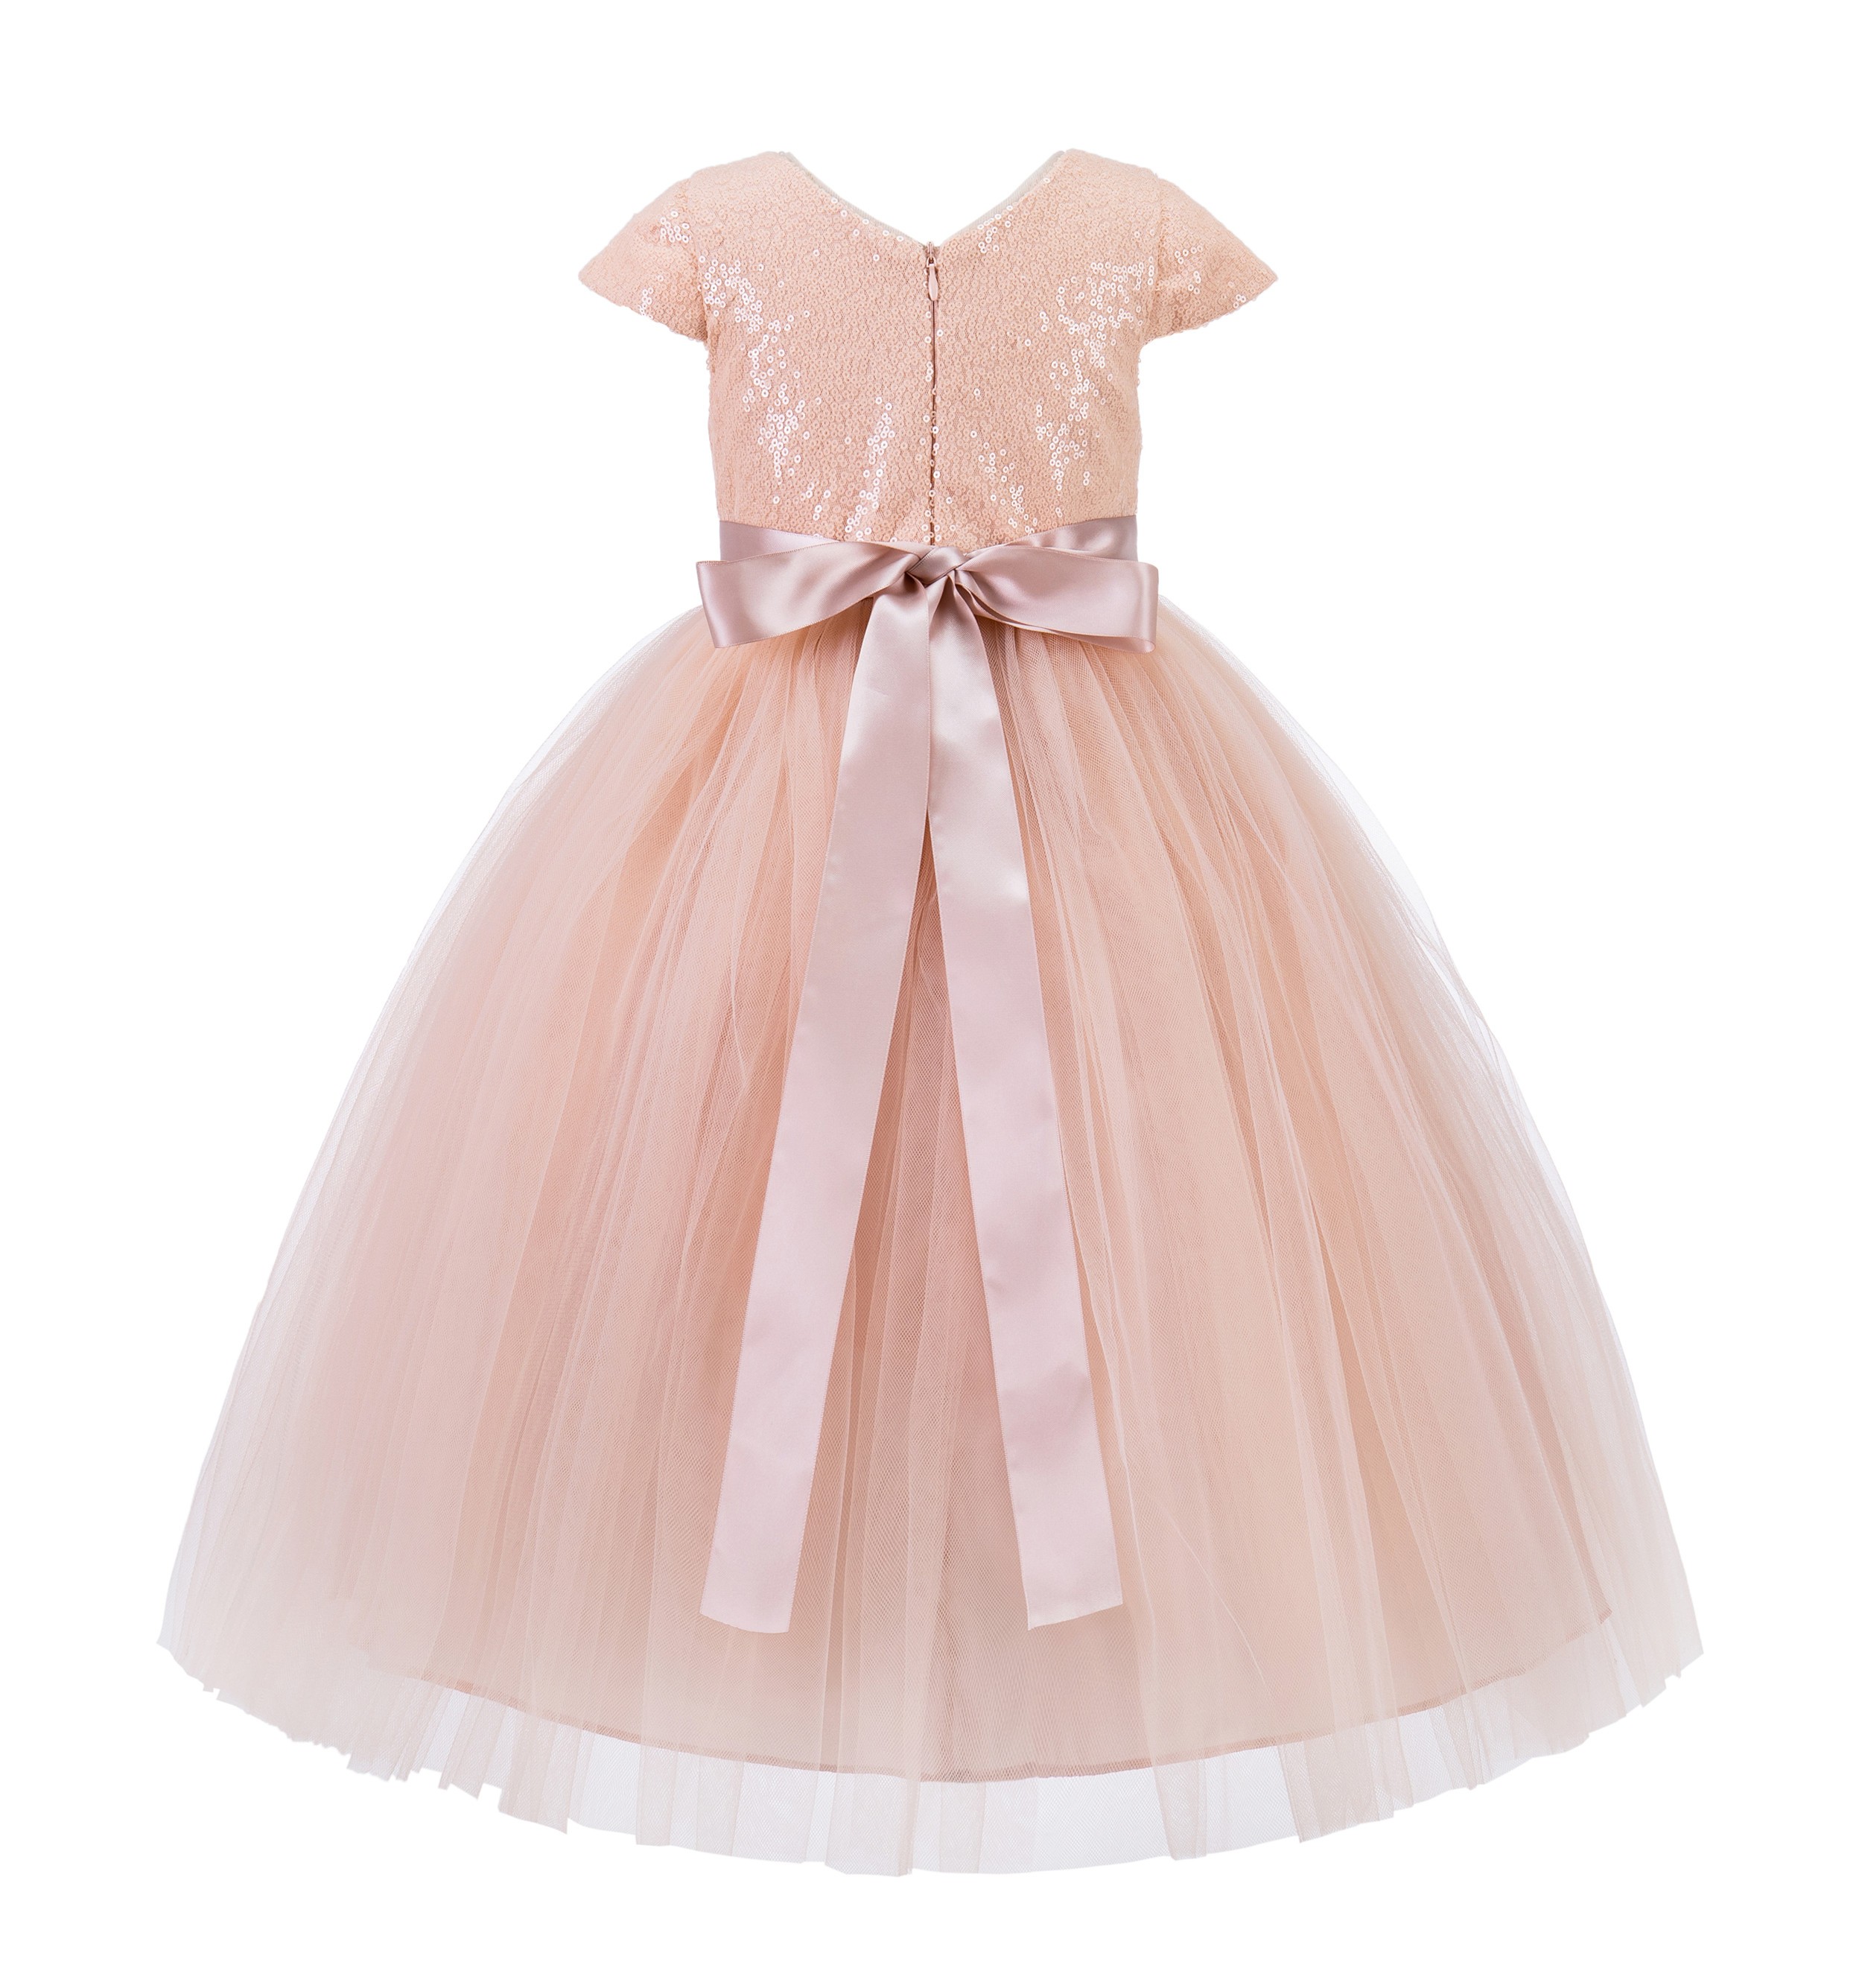 Blush Pink Cap Sleeves Sequin Flower Girl Dress 211